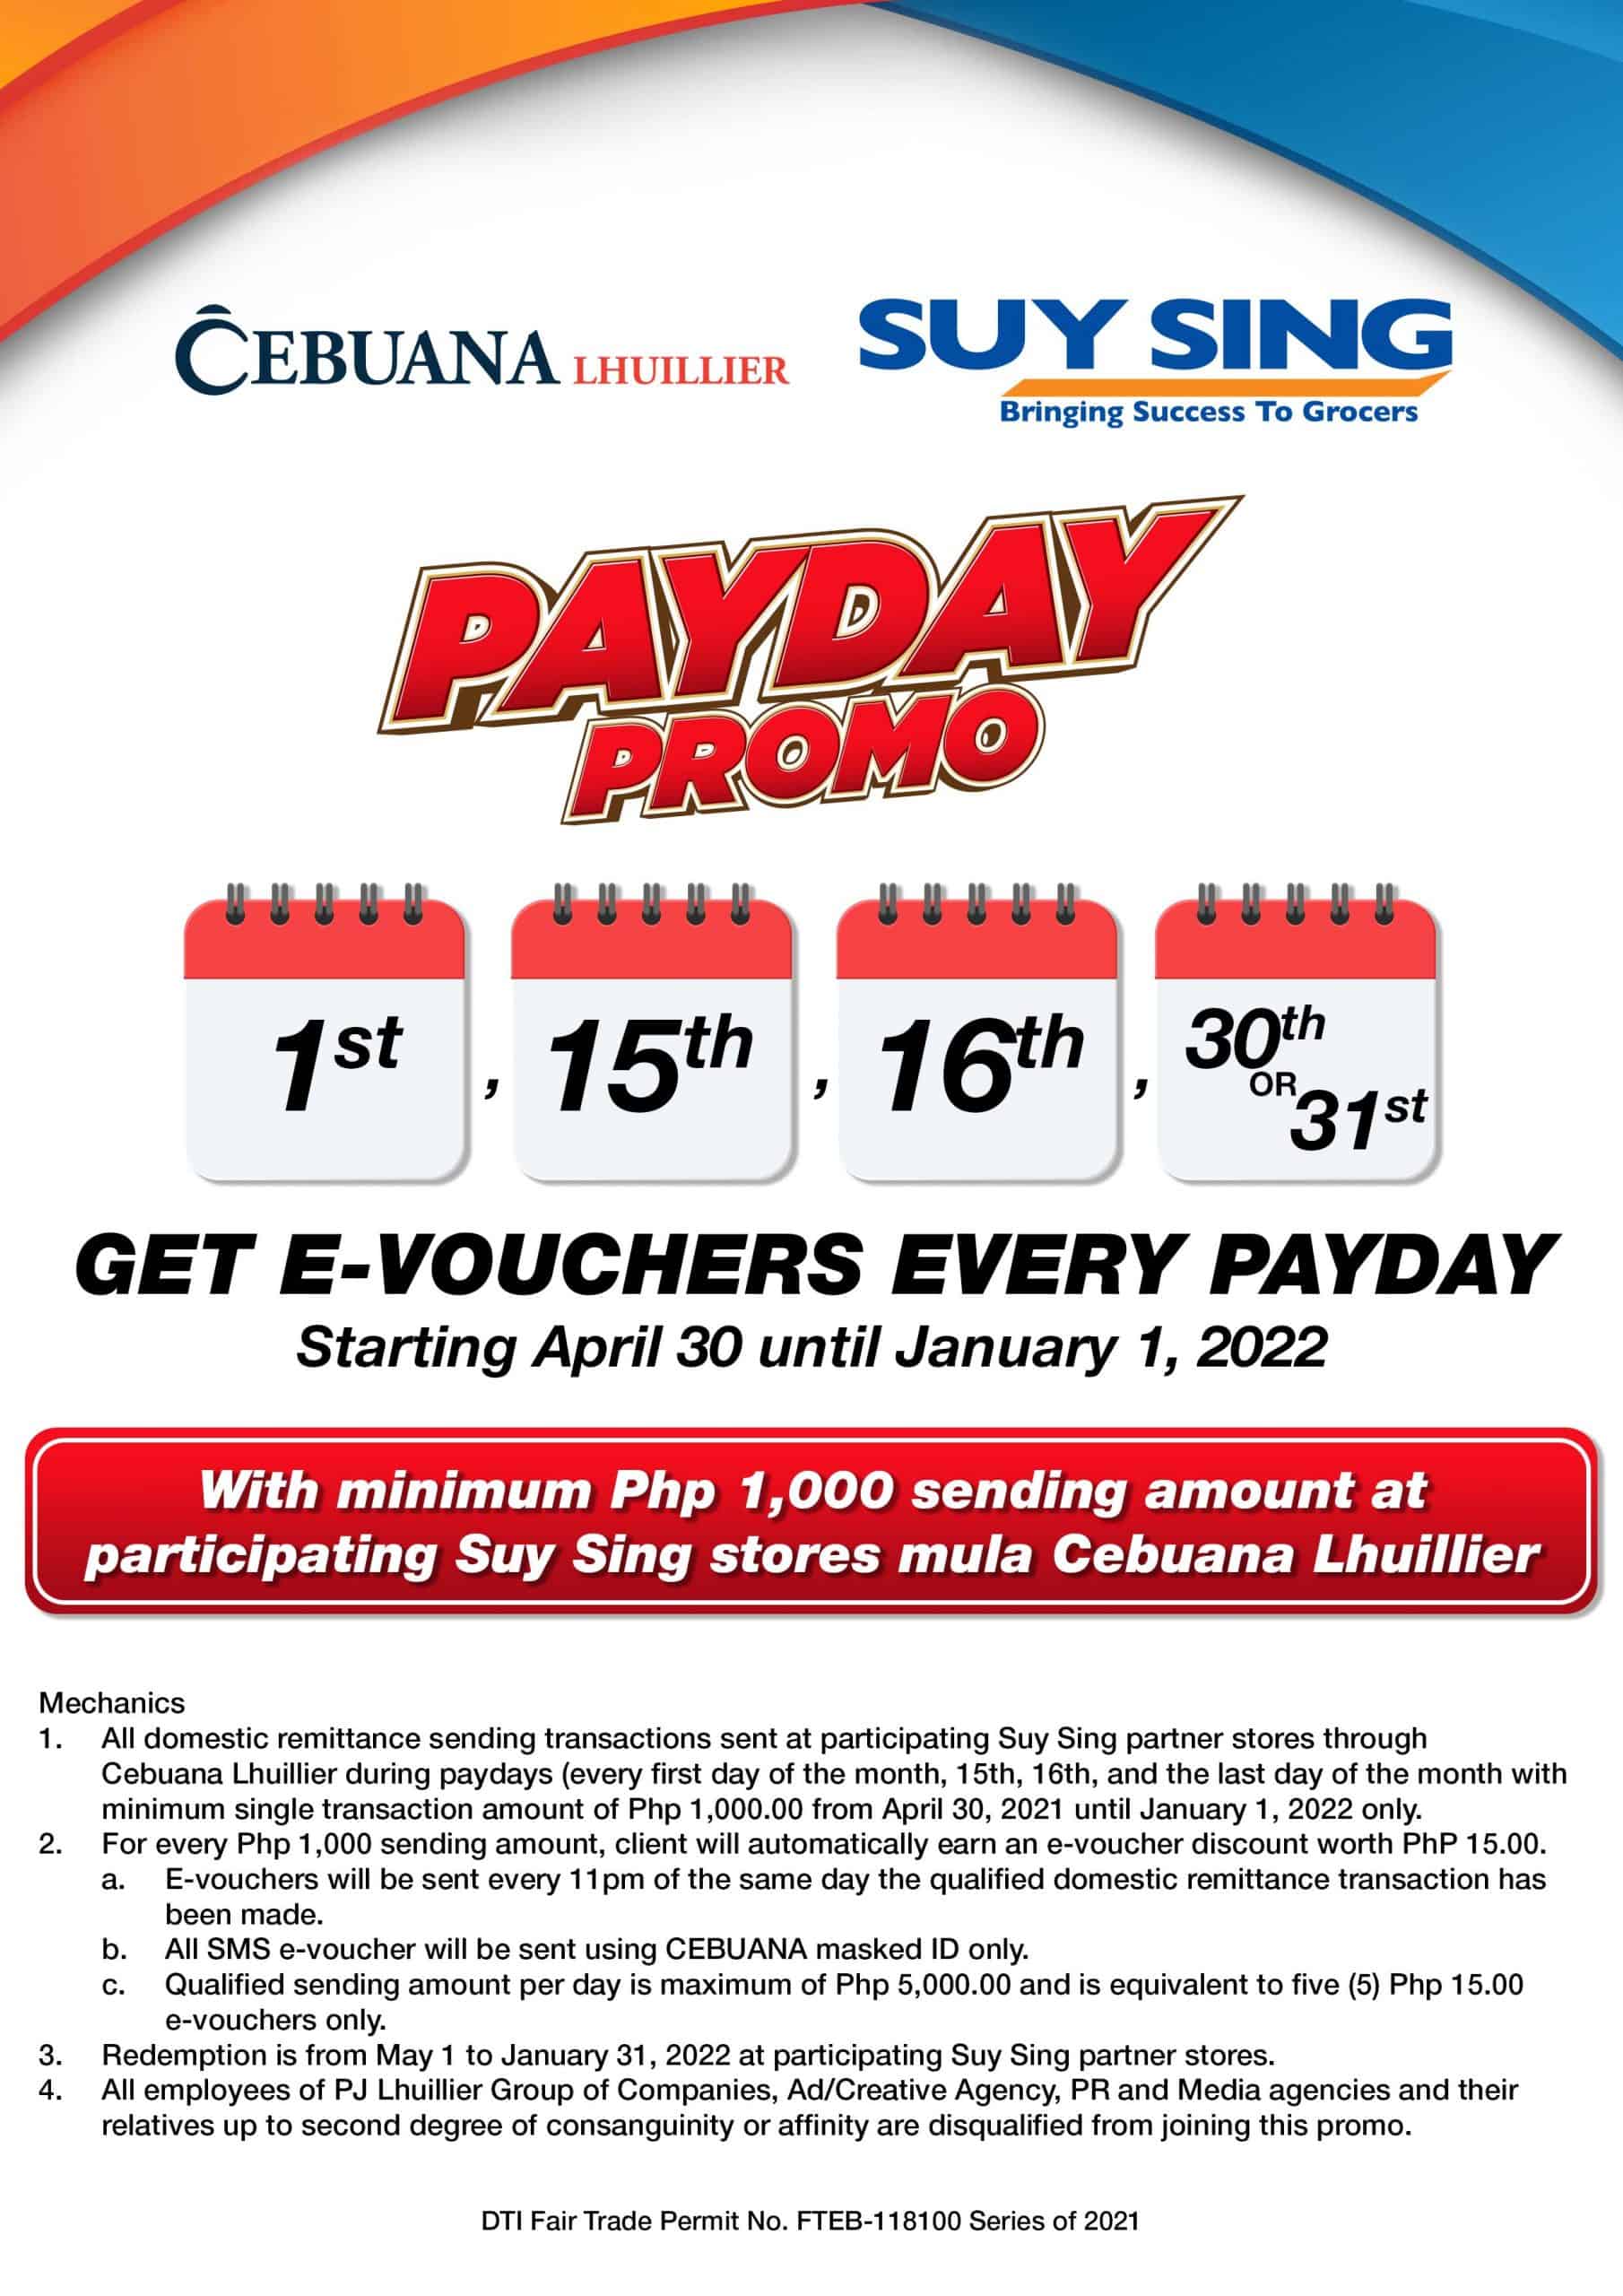 Suy Sing Payday Promo 2021 • Cebuana Lhuillier Pawnshop